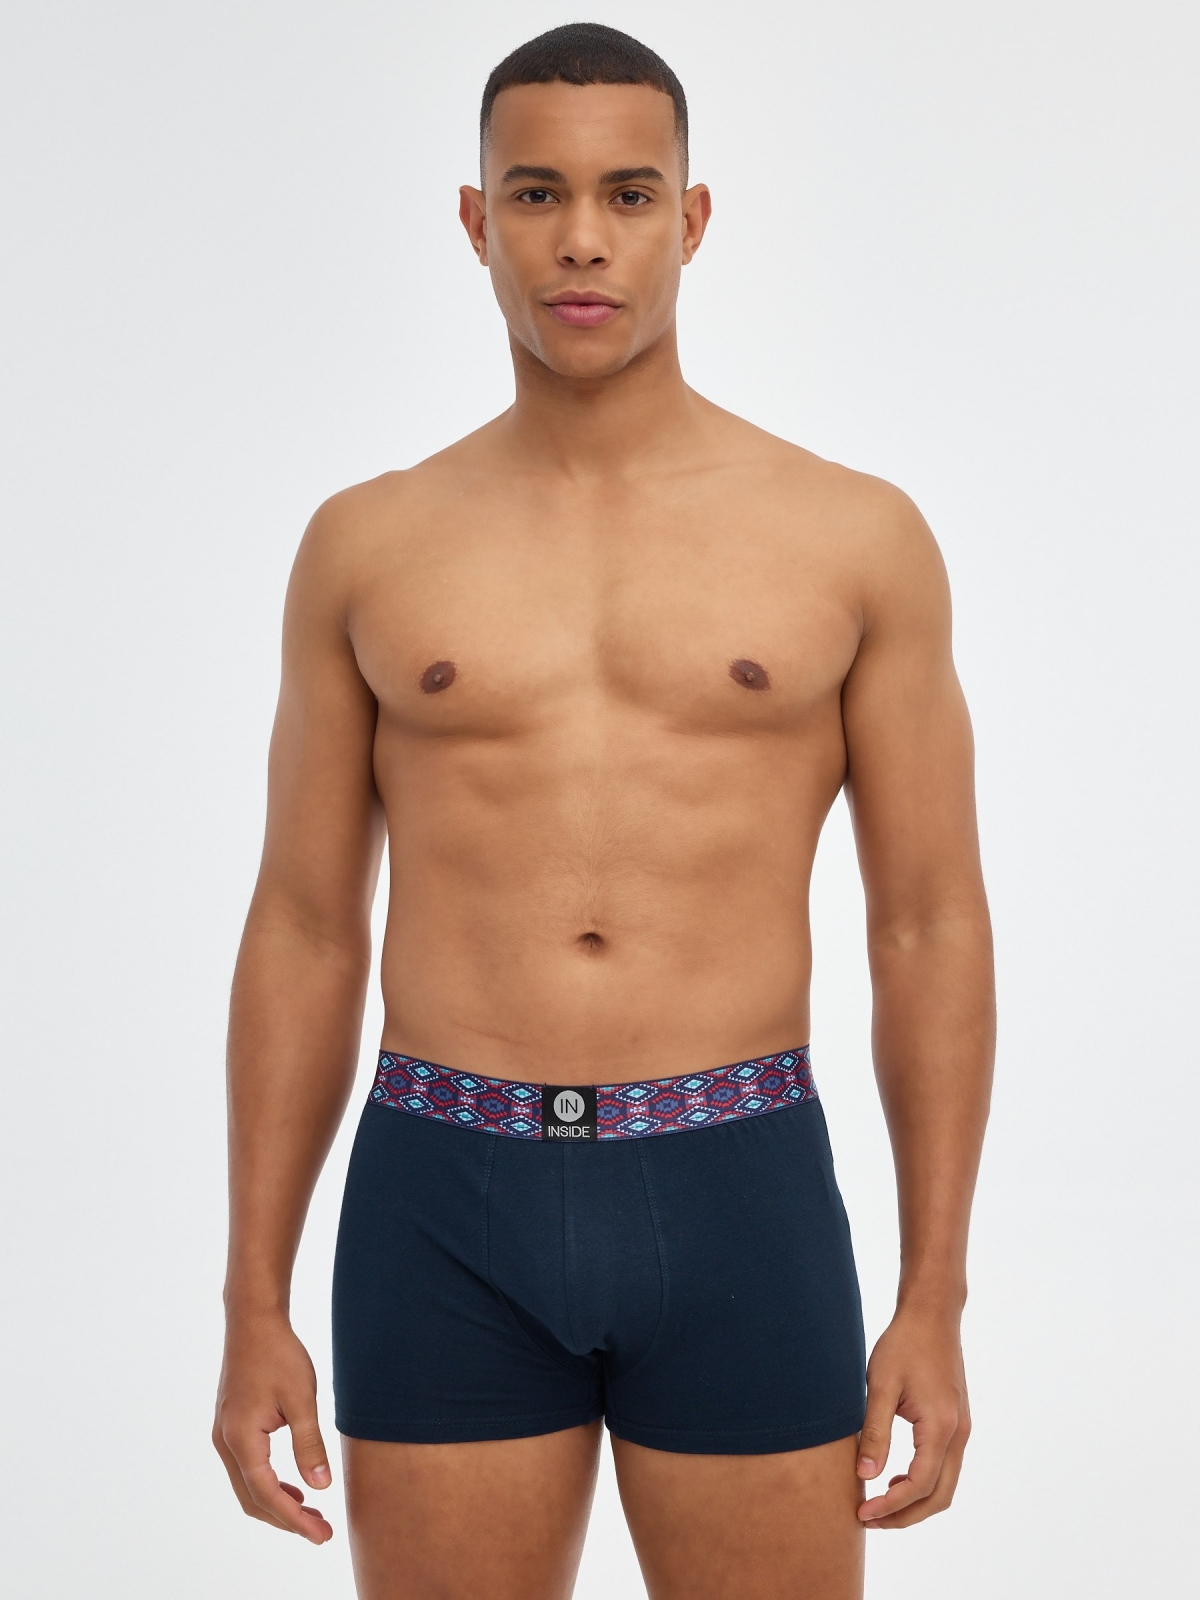 Cuecas de boxer impressas para homens multicolorido vista frontal